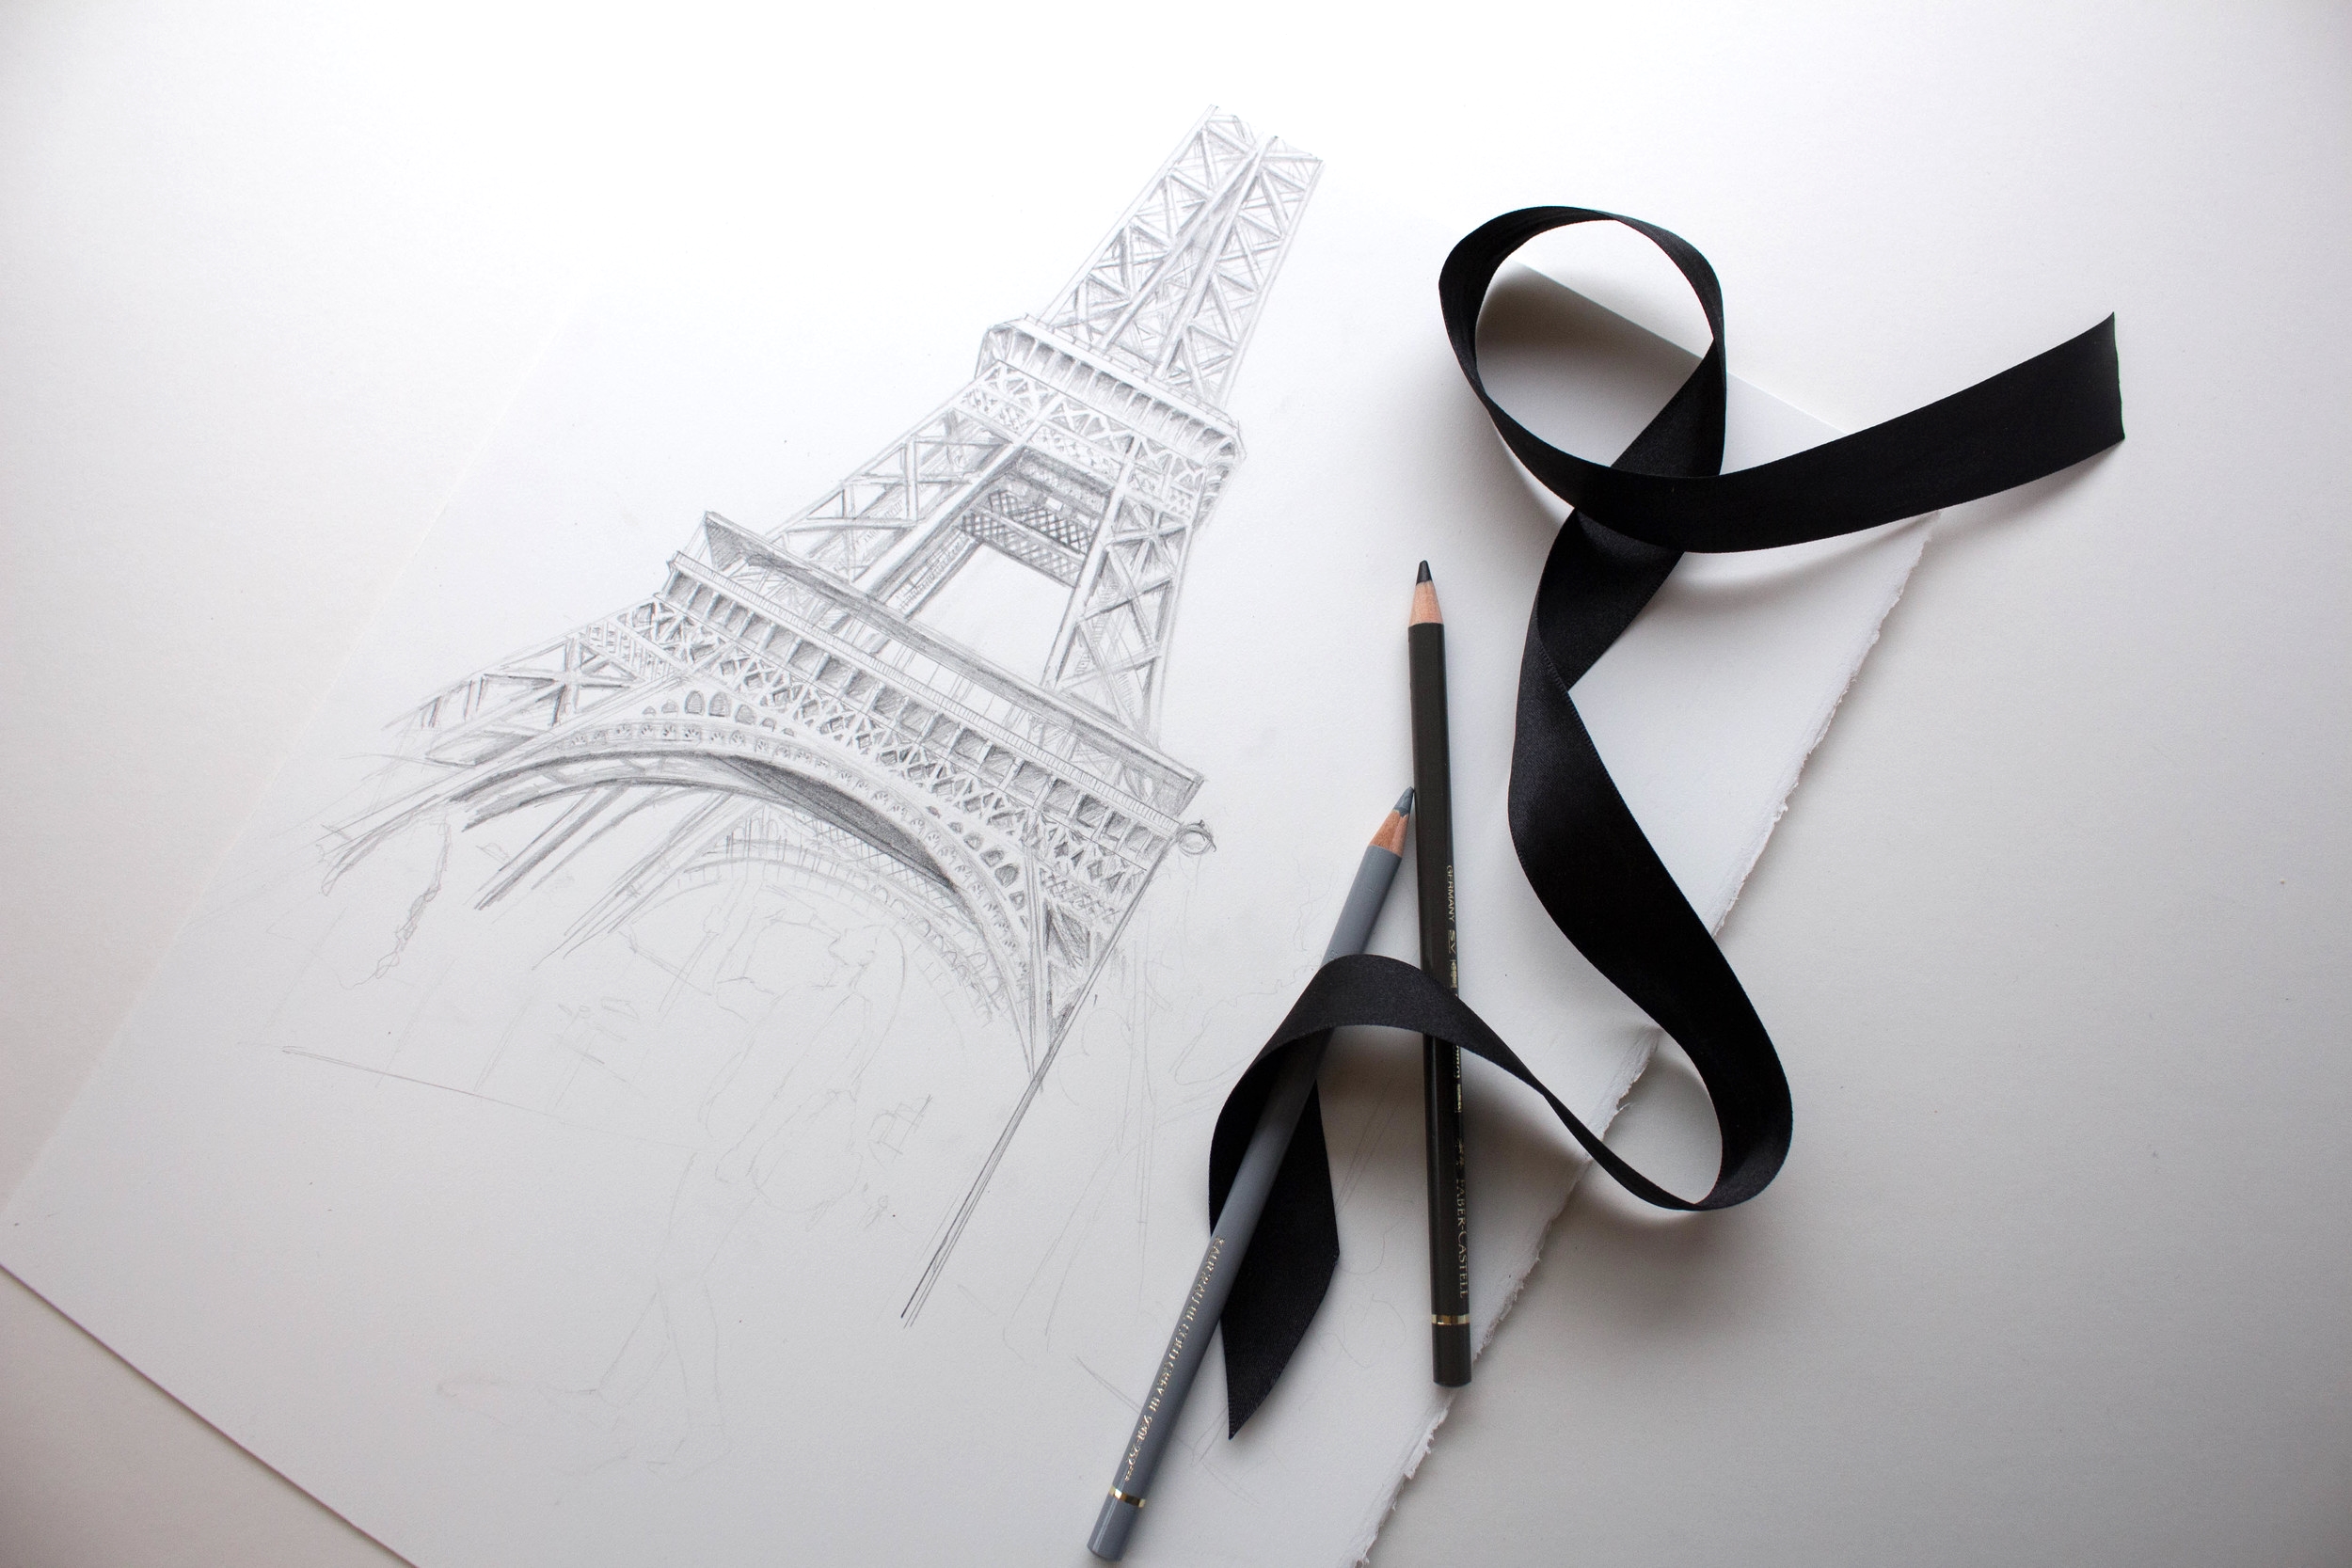 11"x14" illustration of Eiffel Tower 